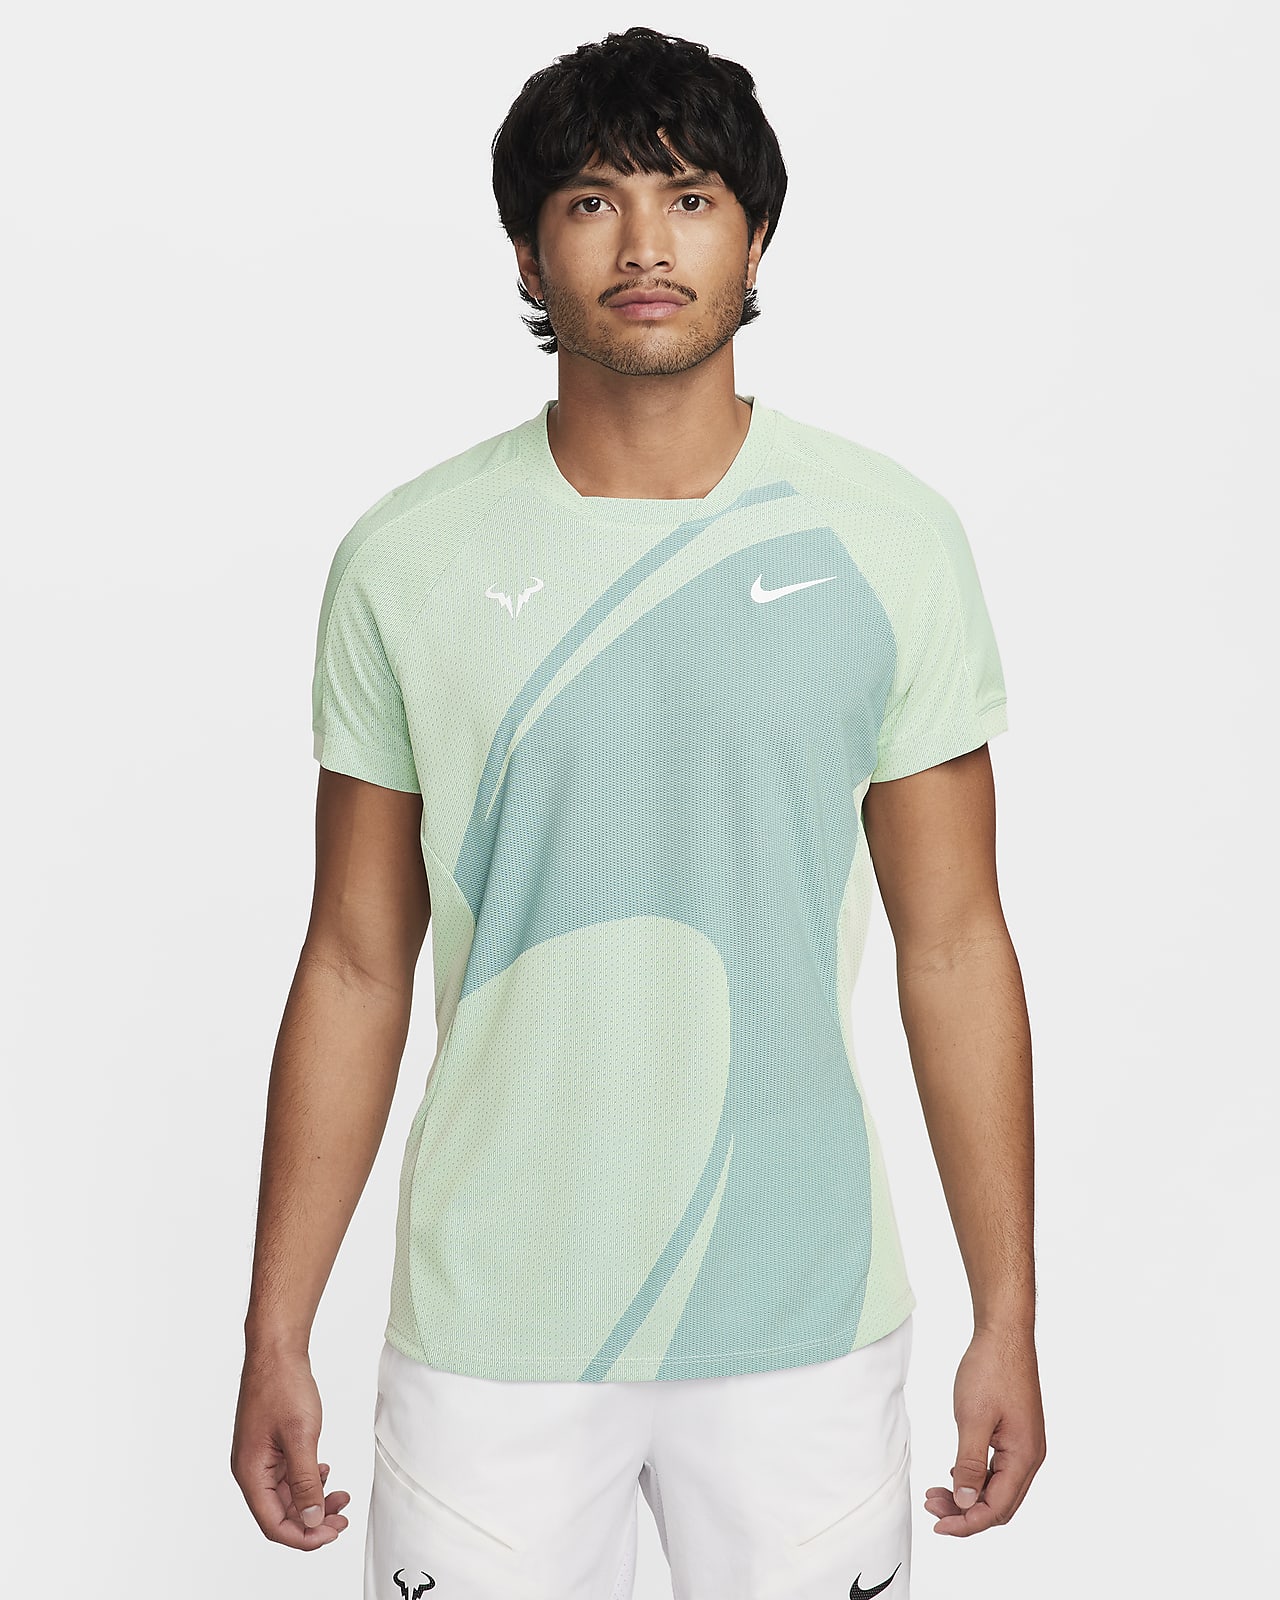 Rafa Nike Dri-FIT ADV Kurzarm-Tennisoberteil für Herren